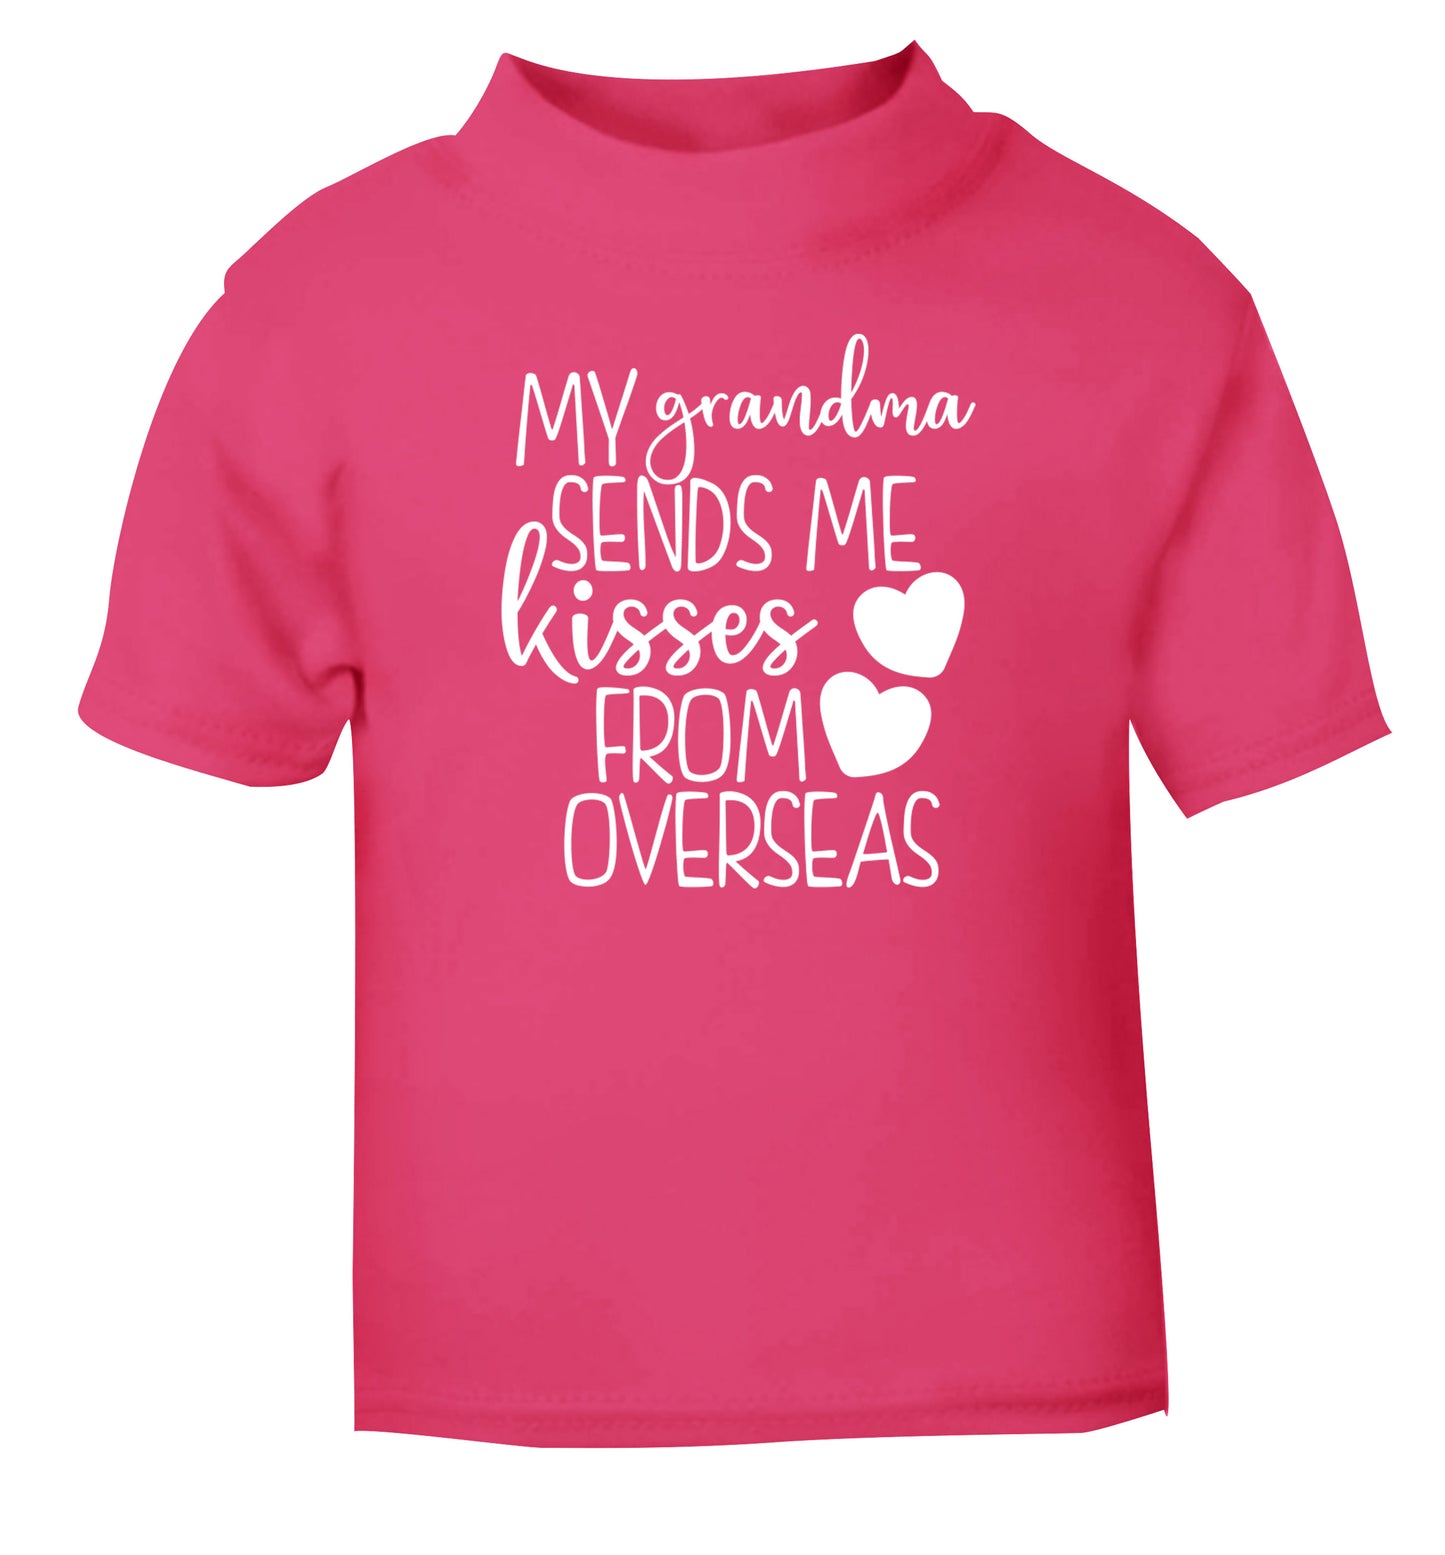 My Grandma sends me kisses from overseas pink Baby Toddler Tshirt 2 Years